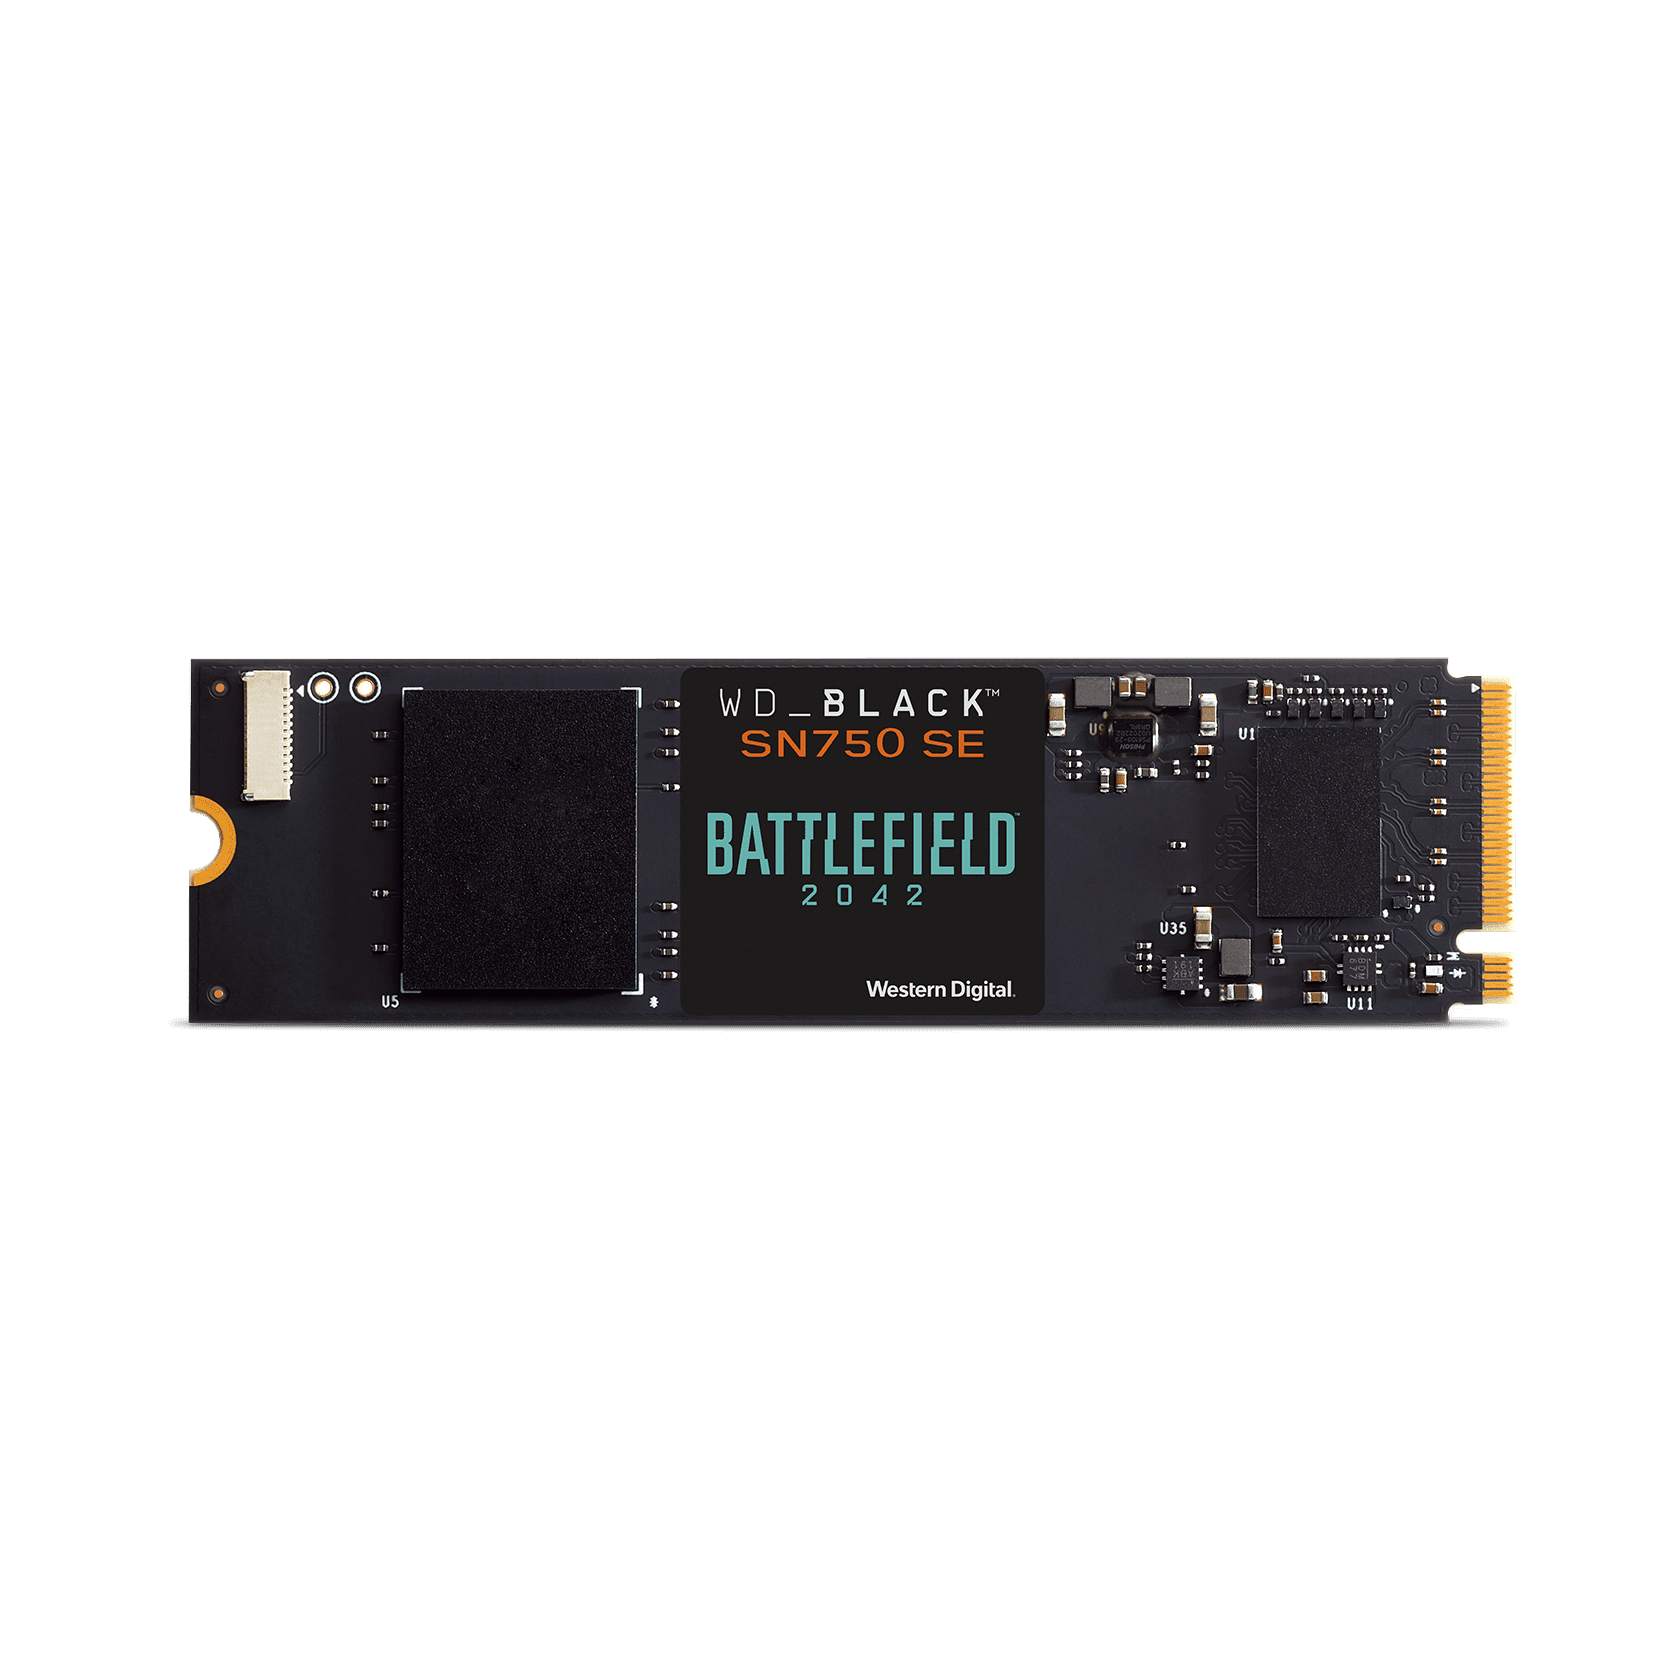 WD_BLACK 500GB SN750 SE NVMe SSD with Battlefield 2042 Game Code Bundle, Internal M.2 2280 Gaming Solid State Drive - WDBB9J5000ANC-NRSN $29.99